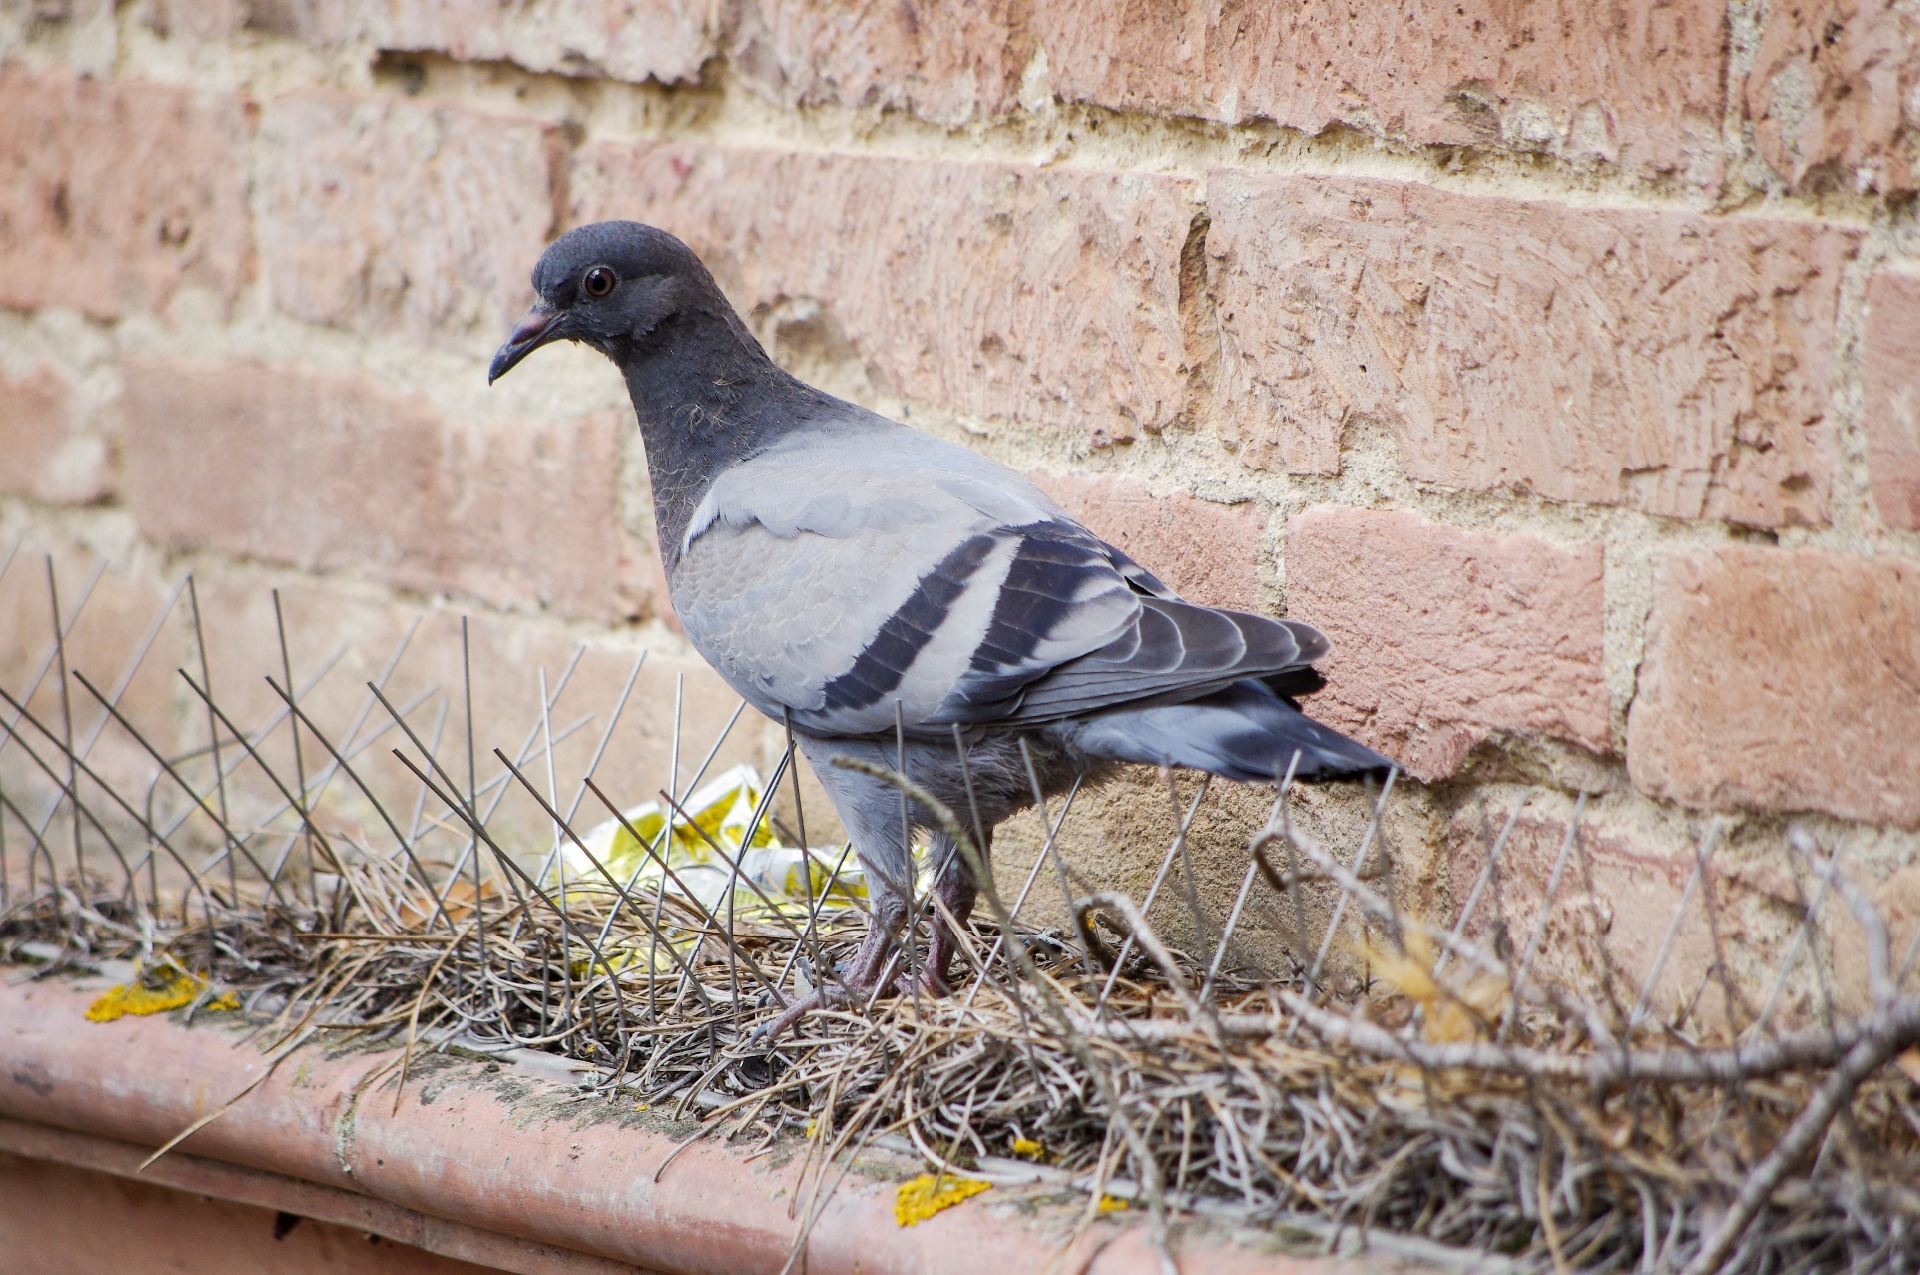 Pigeons on a handrail